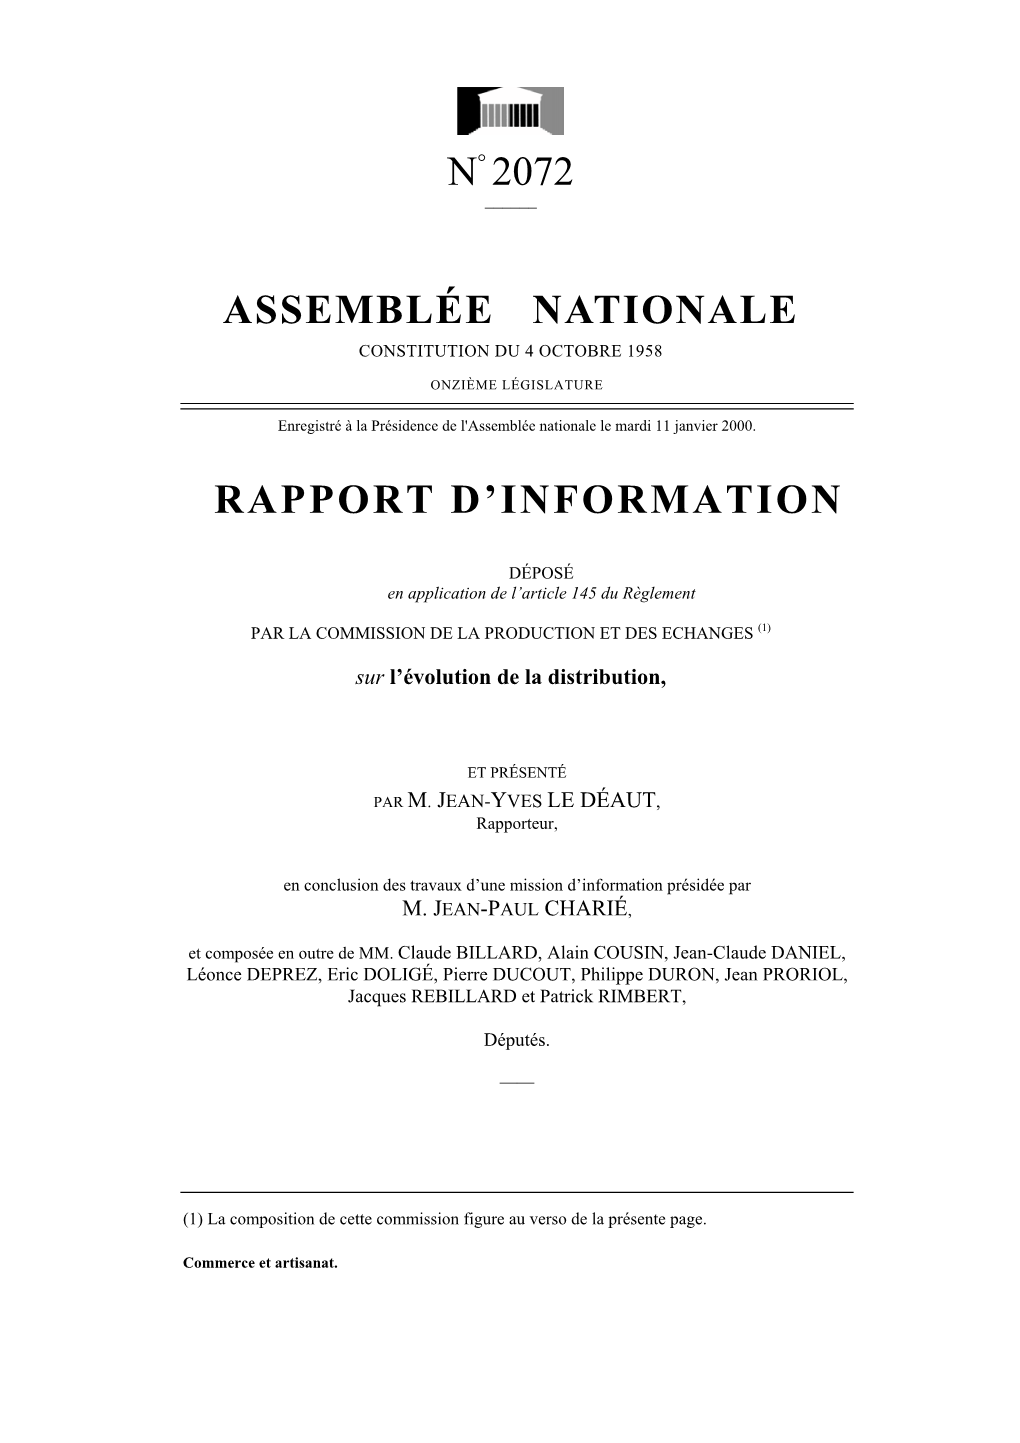 N° 2072 Assemblée Nationale Rapport D'information